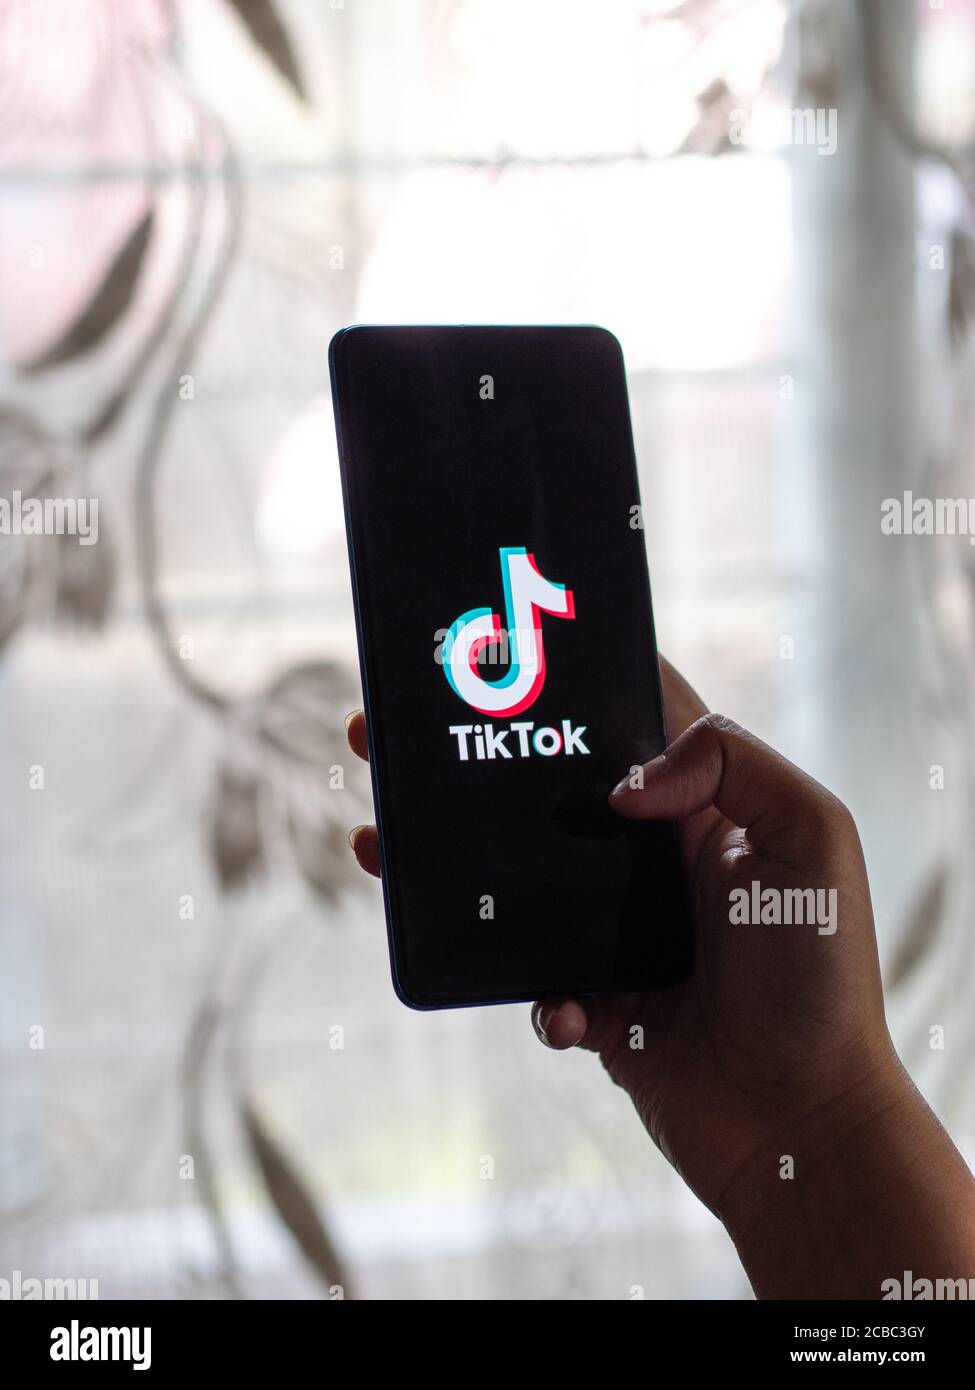 Assam, india - Augest 8, 2020 : Tiktok app logo on phone screen stock image. Stock Photo